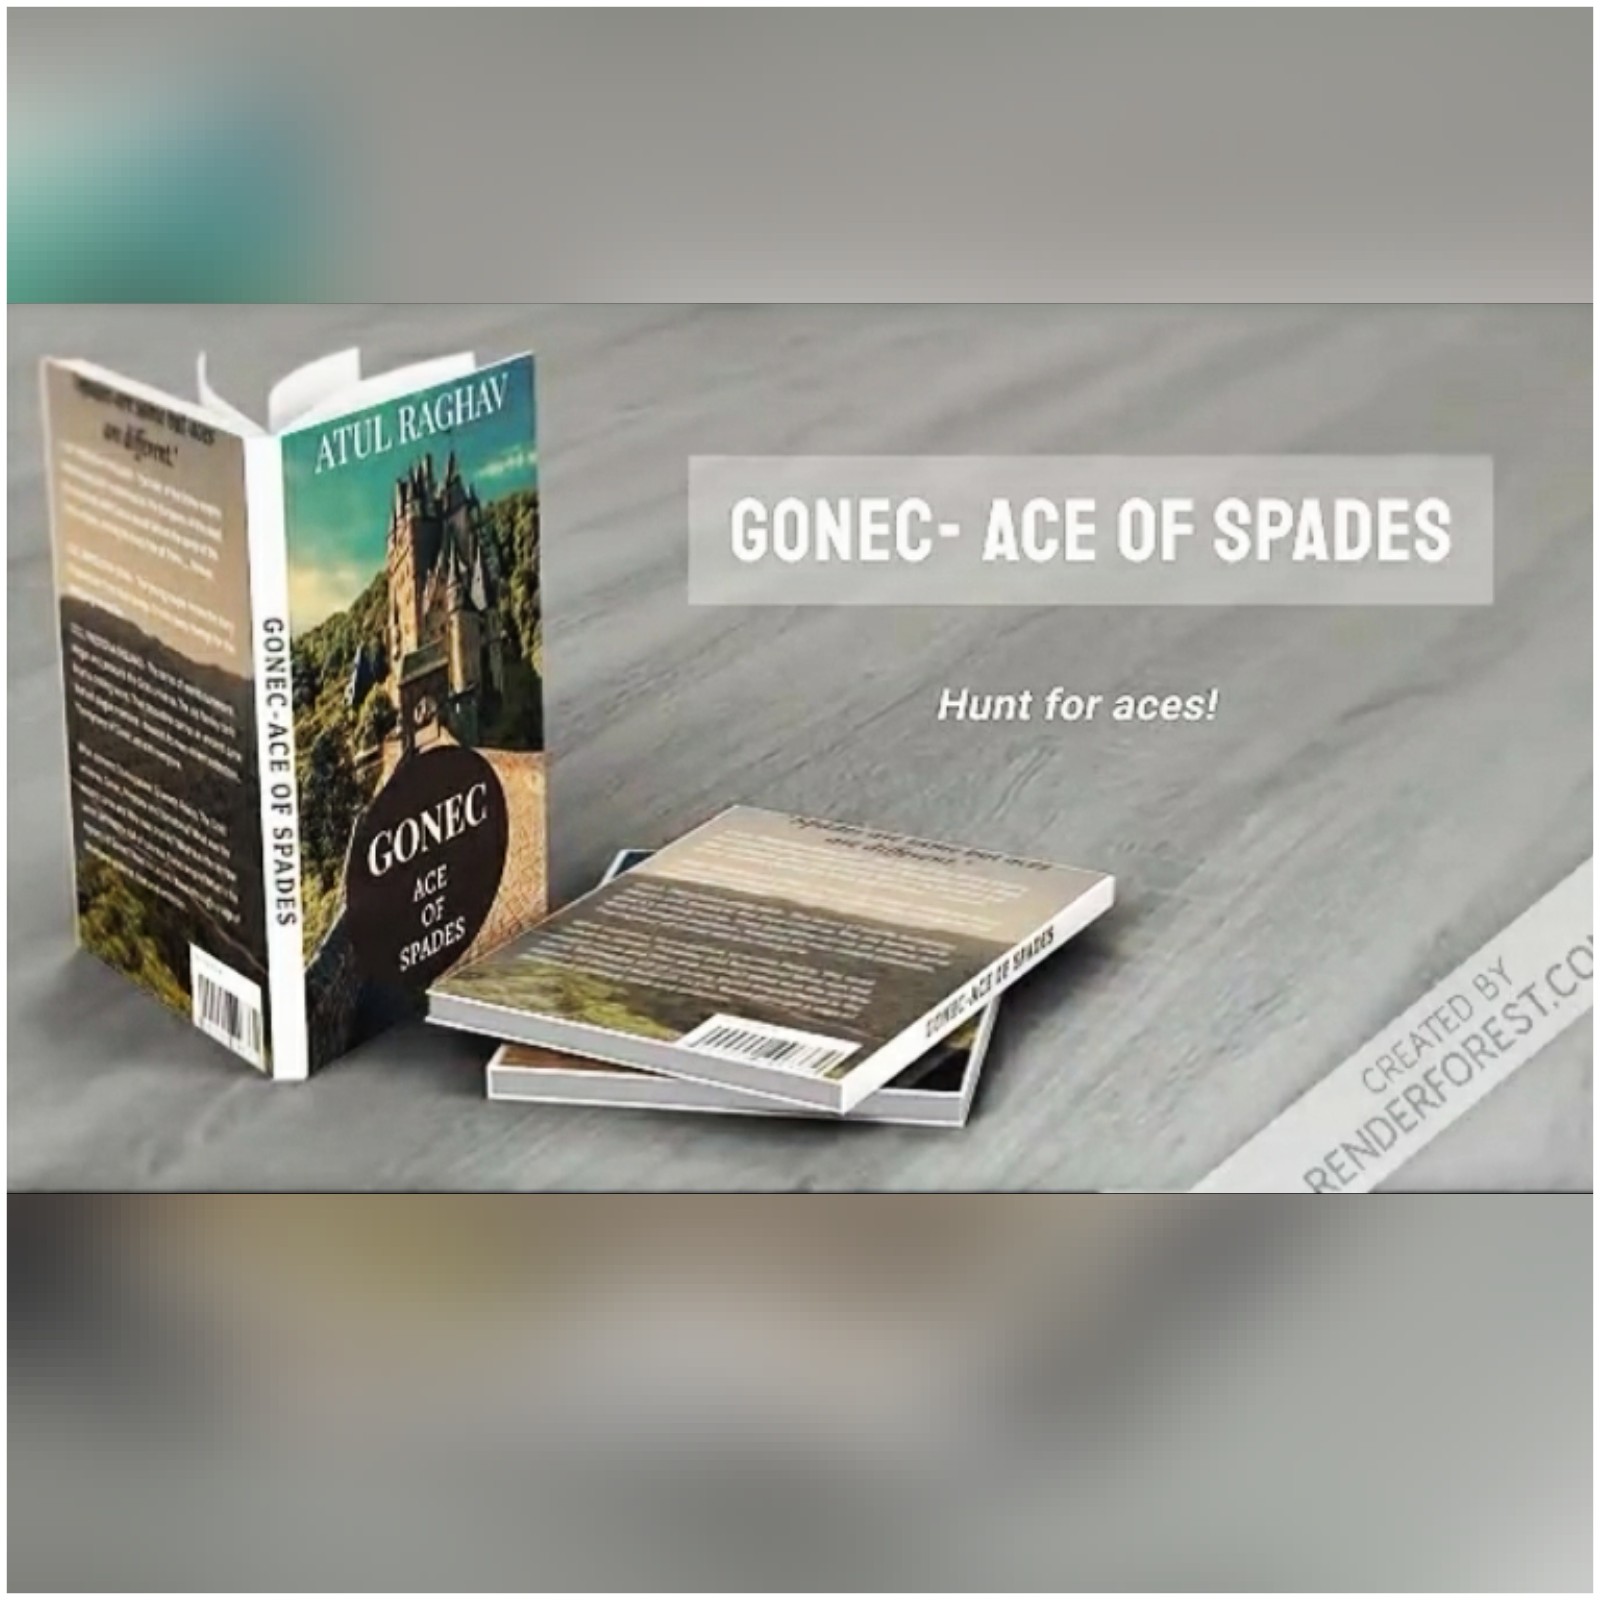 FREE: Gonec ace of spades by Atul raghav